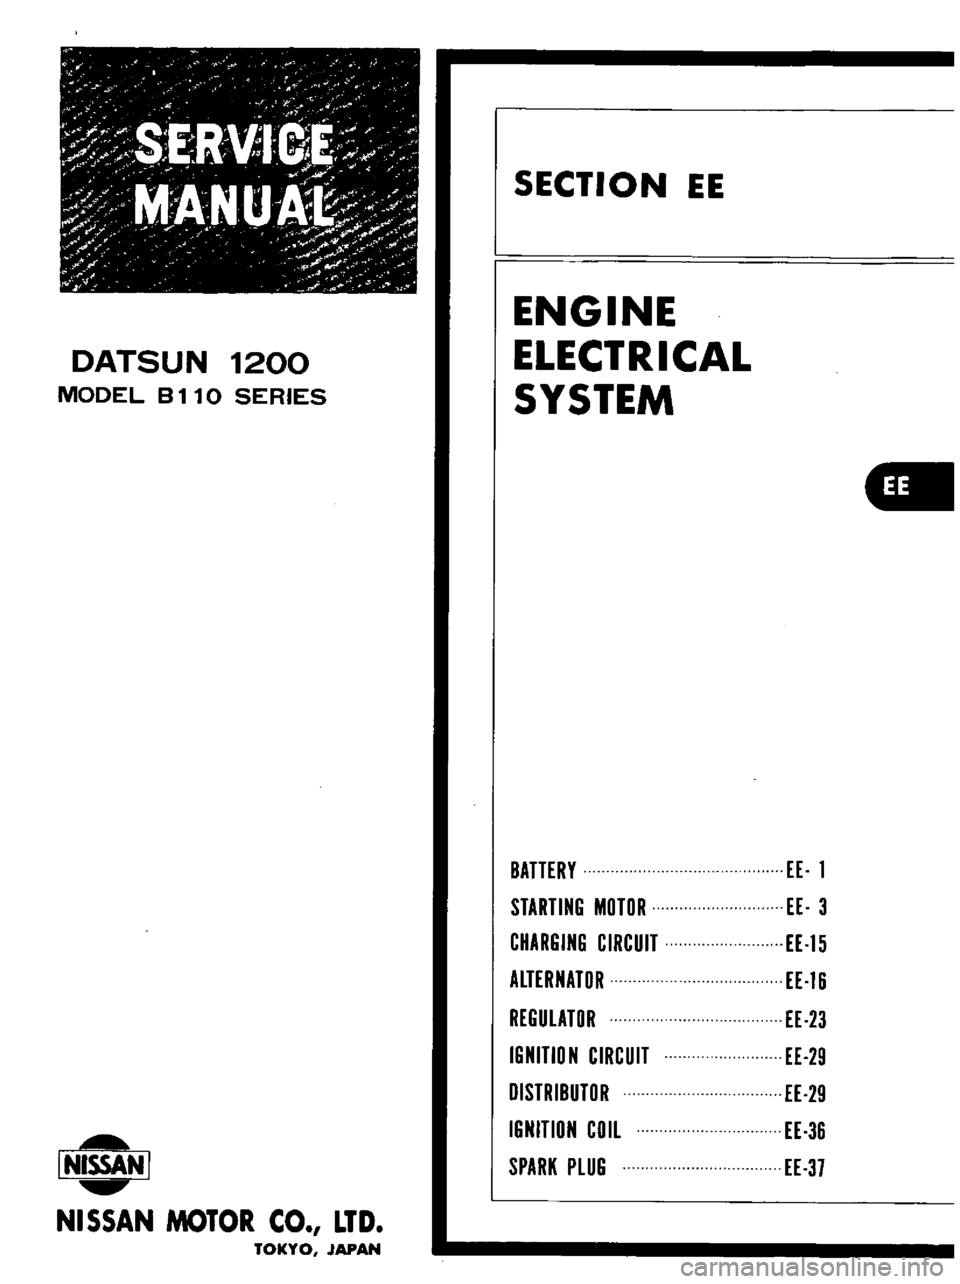 DATSUN B110 1973  Service Repair Manual 
DATSUN

1200

MODEL 
B 
11

0 
SERIES

L 
NISSAN

I

NISSAN 
MOTOR 
CO

LTD

TOKYO 
JAPAN 
SECTION

EE

ENGINE

ELECTRICAL

SYSTEM

BATTERY

STARTING 
MOTOR

CHARGING

CIRCUIT

ALTERNATOR

REGULATOR
